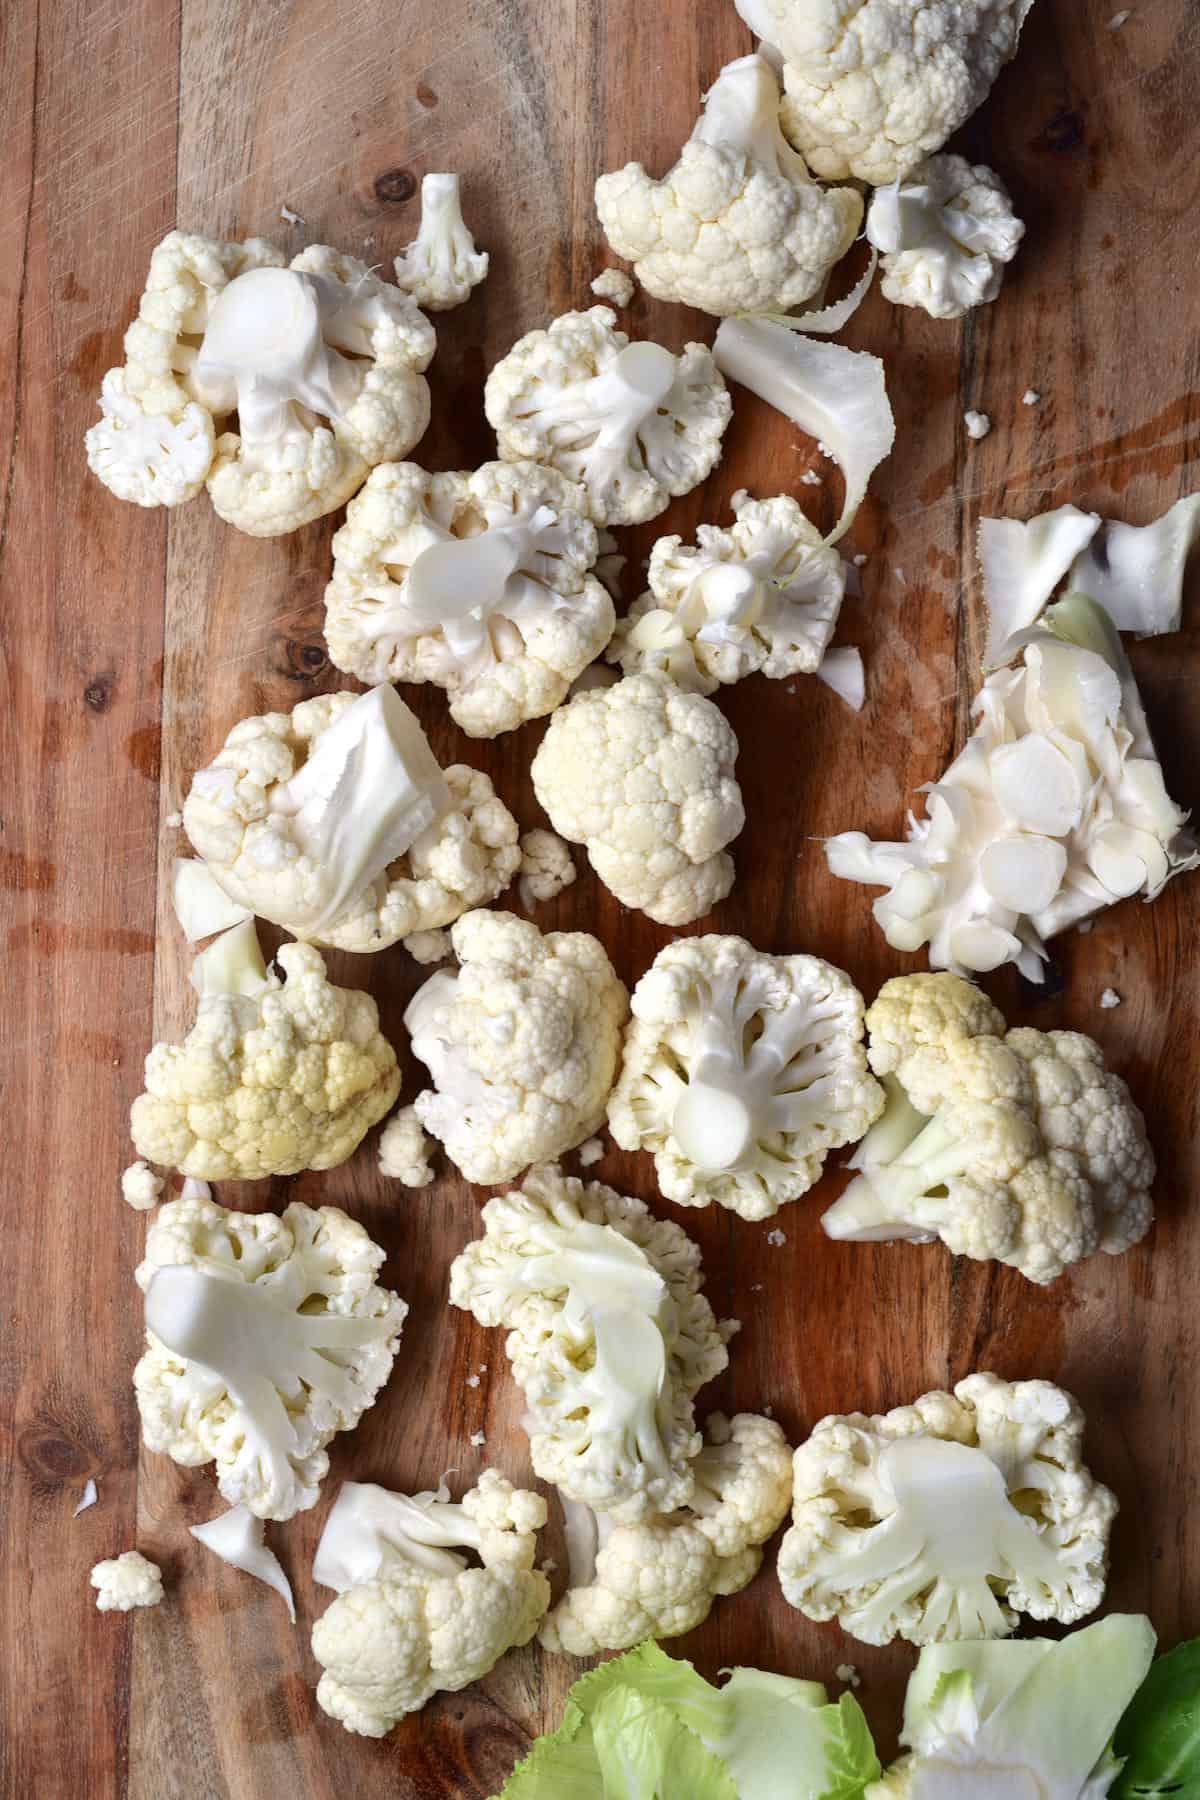 Cauliflower cut into florets